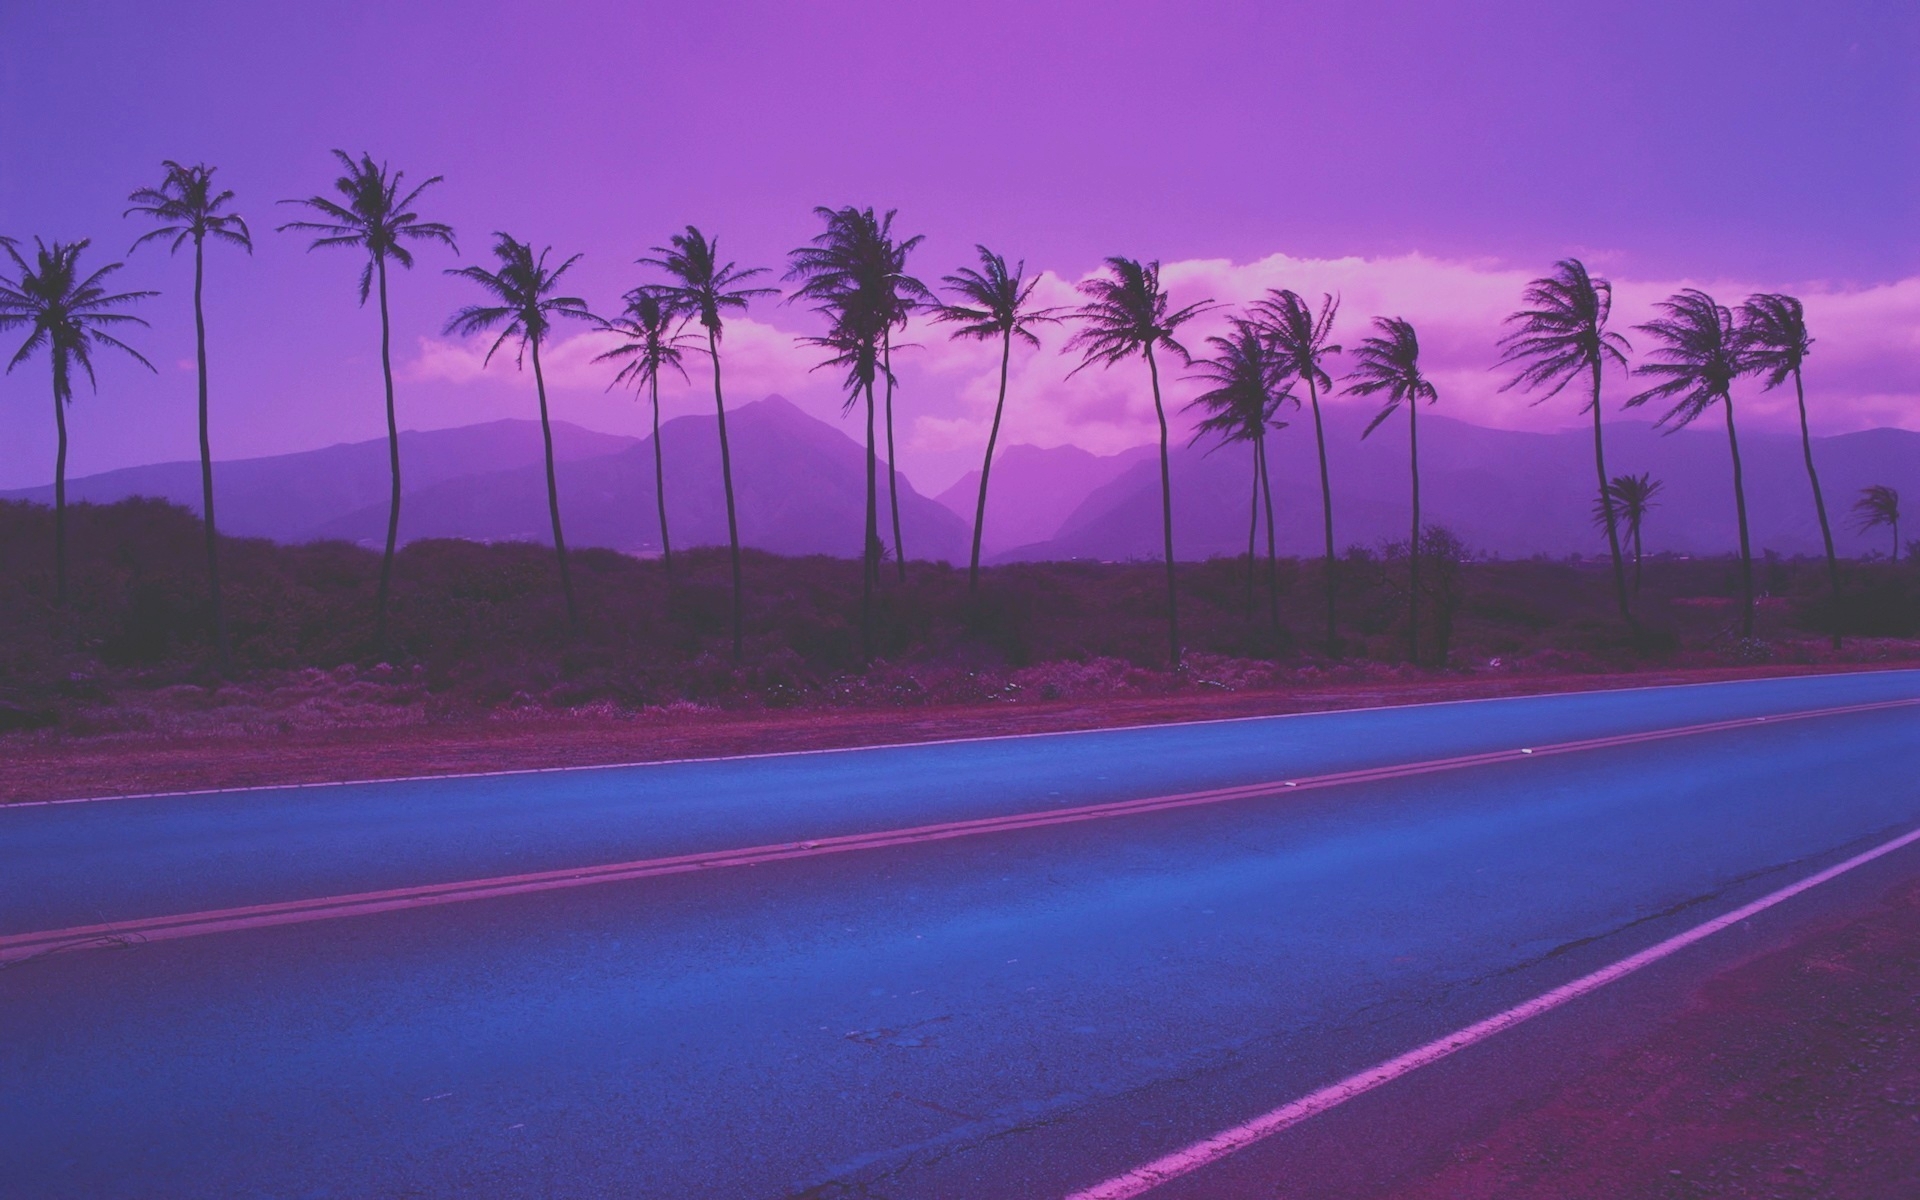 vaporwave wallpaper,sky,purple,tree,road,violet